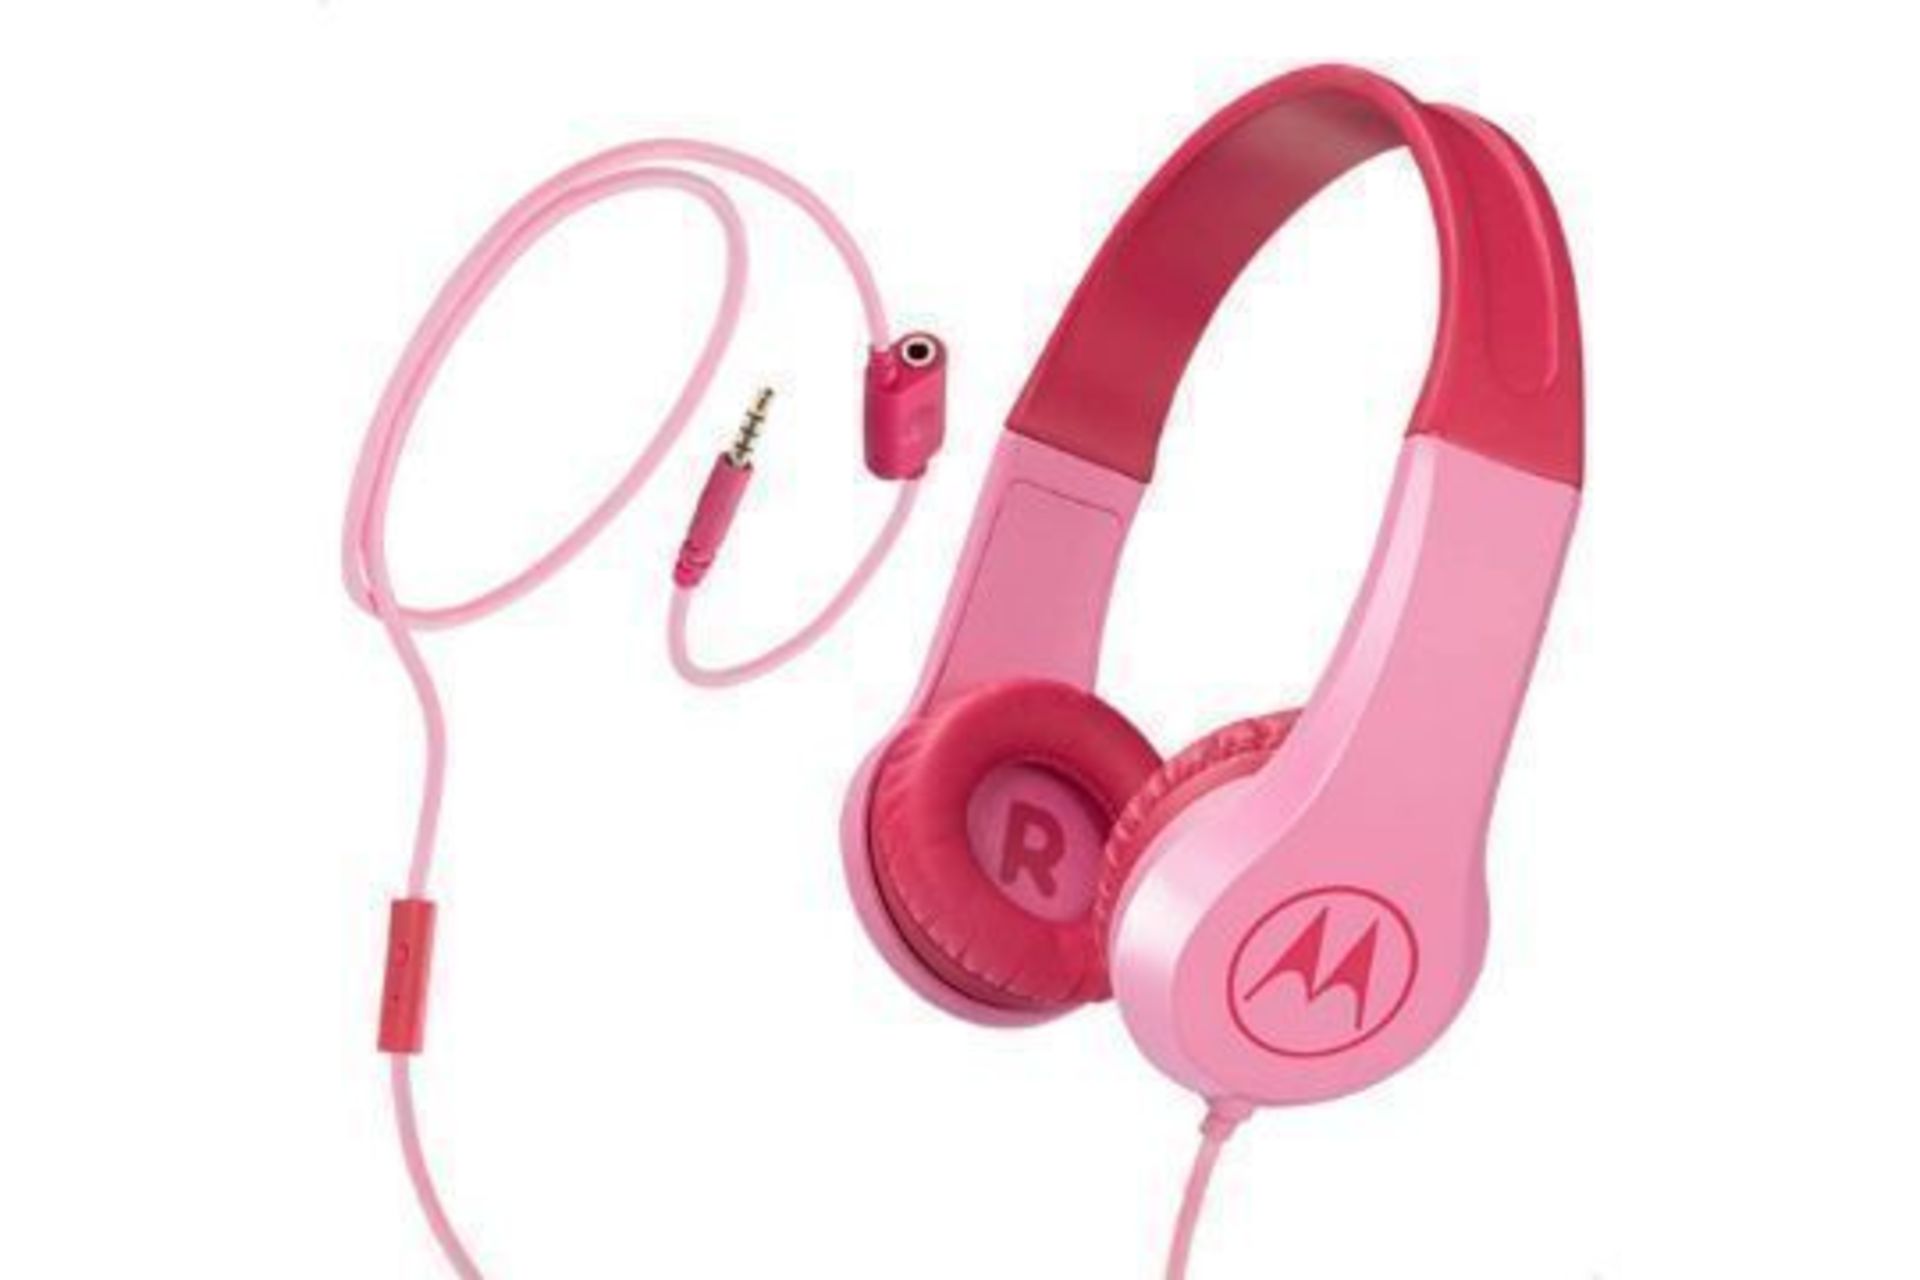 Brand New Motorola Pink Squads 200 Kids Wired Headphones - RRP £13.